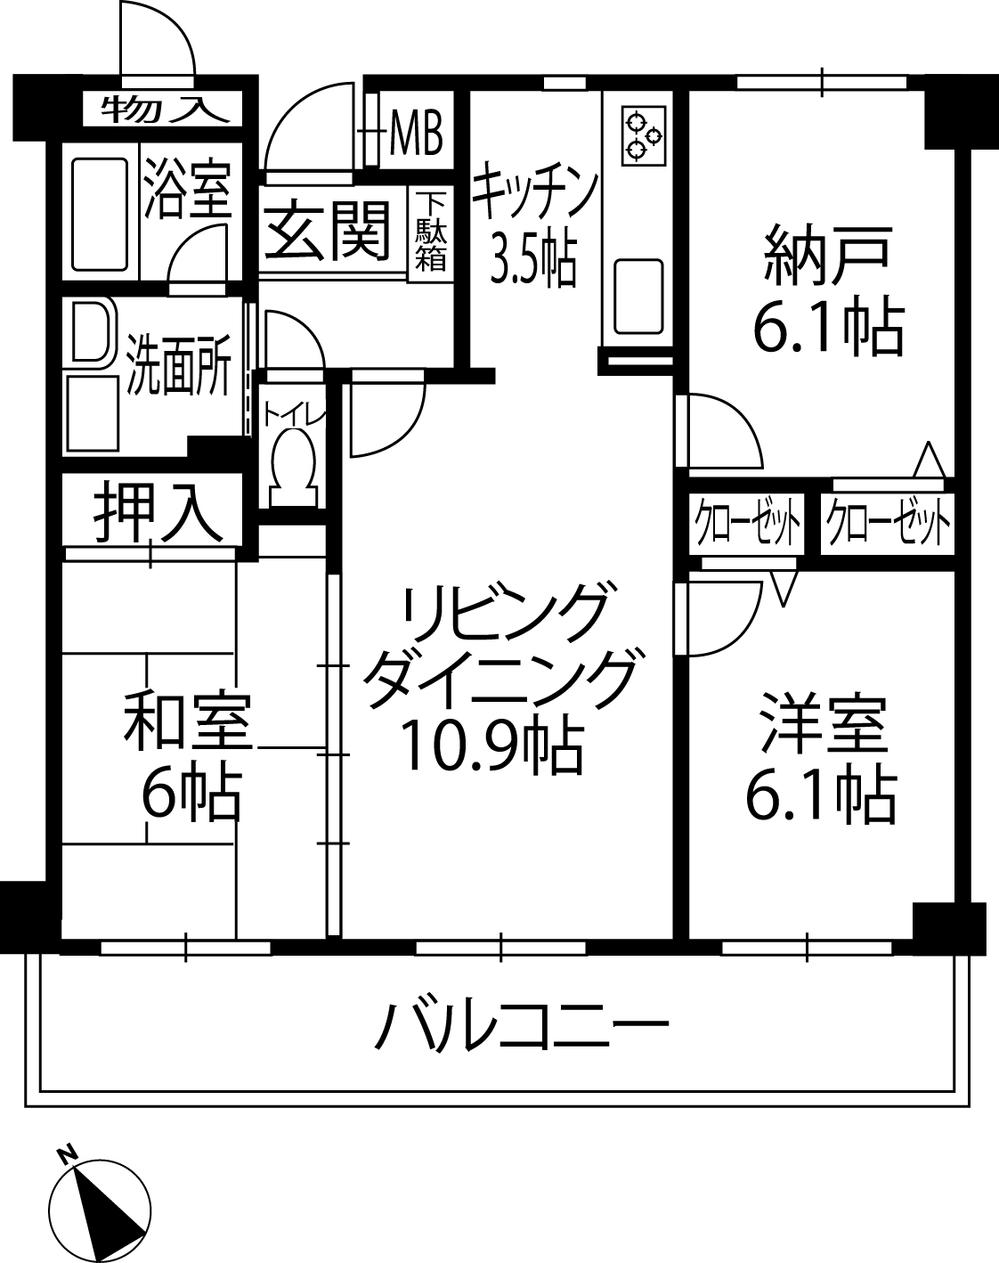 Floor plan. 2LDK + S (storeroom), Price 13.5 million yen, Occupied area 69.56 sq m , Balcony area 11.62 sq m